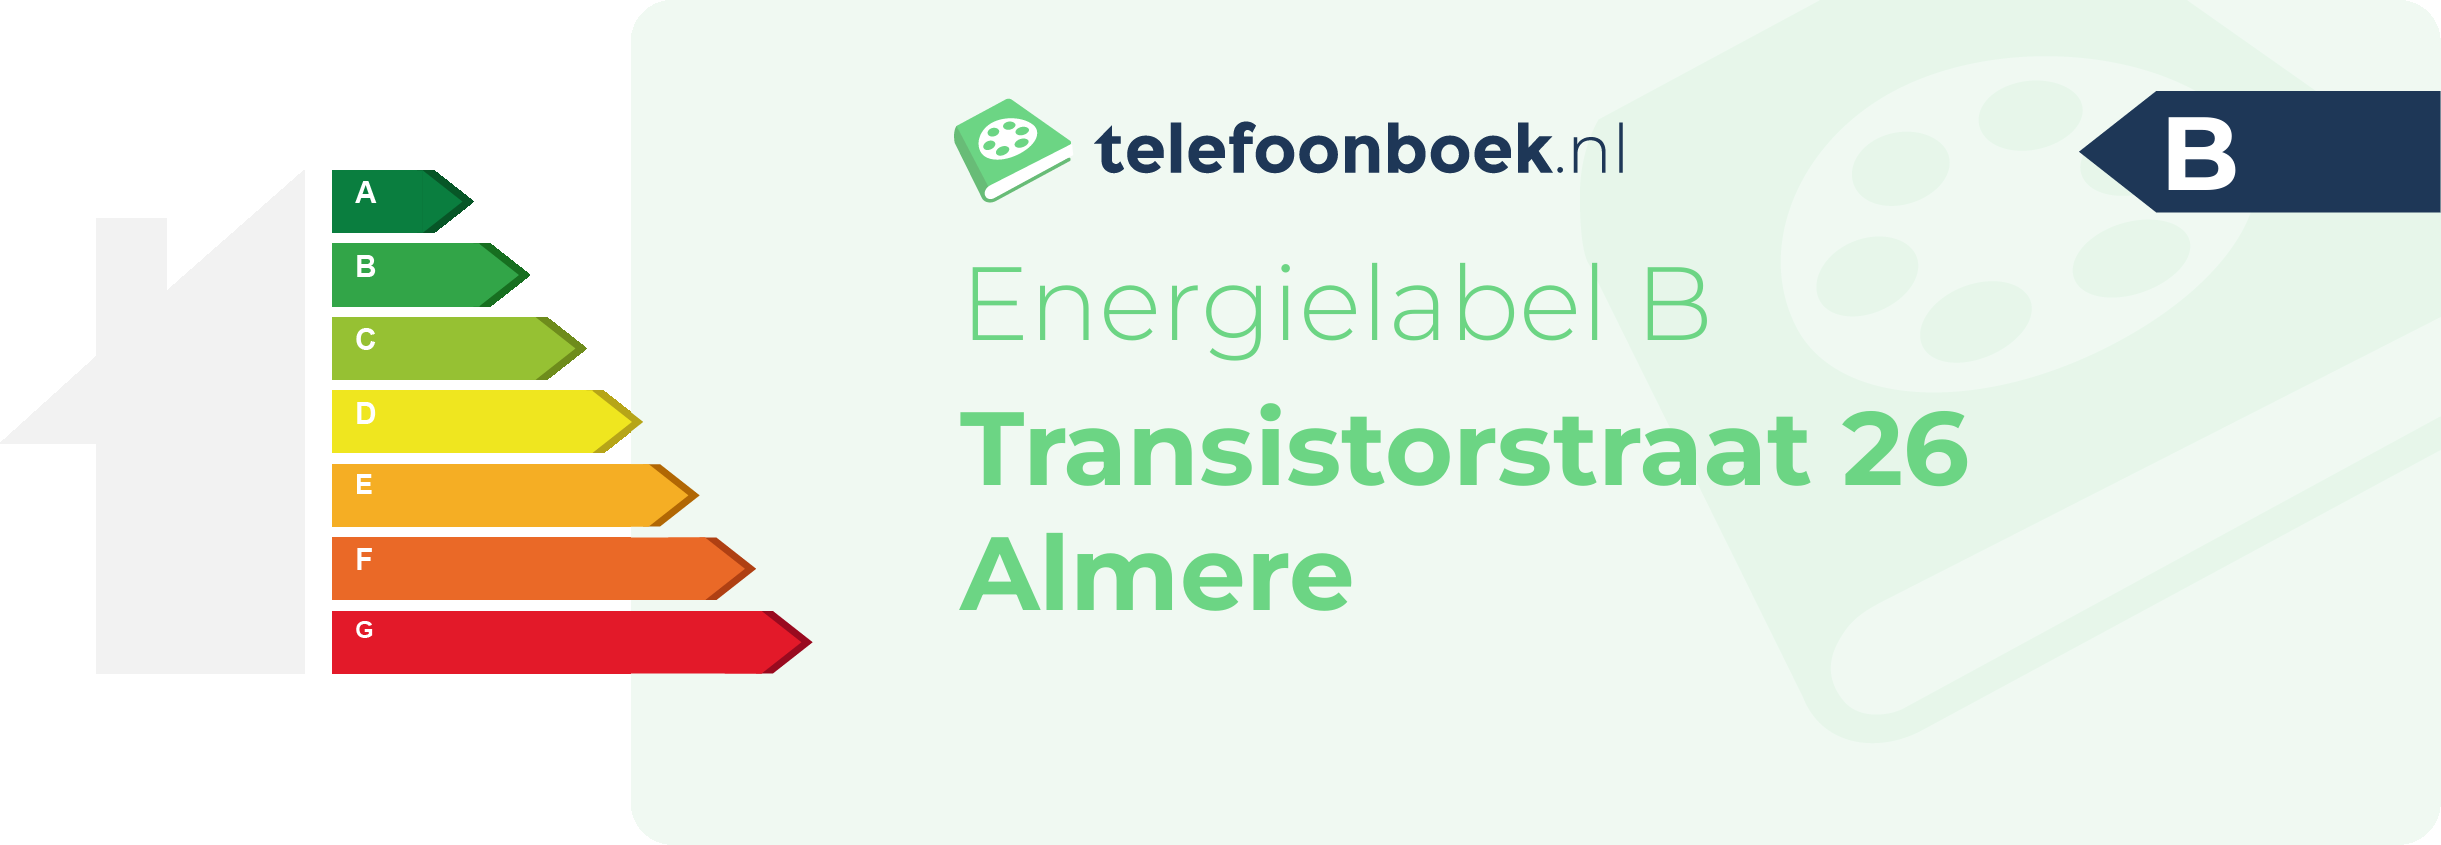 Energielabel Transistorstraat 26 Almere